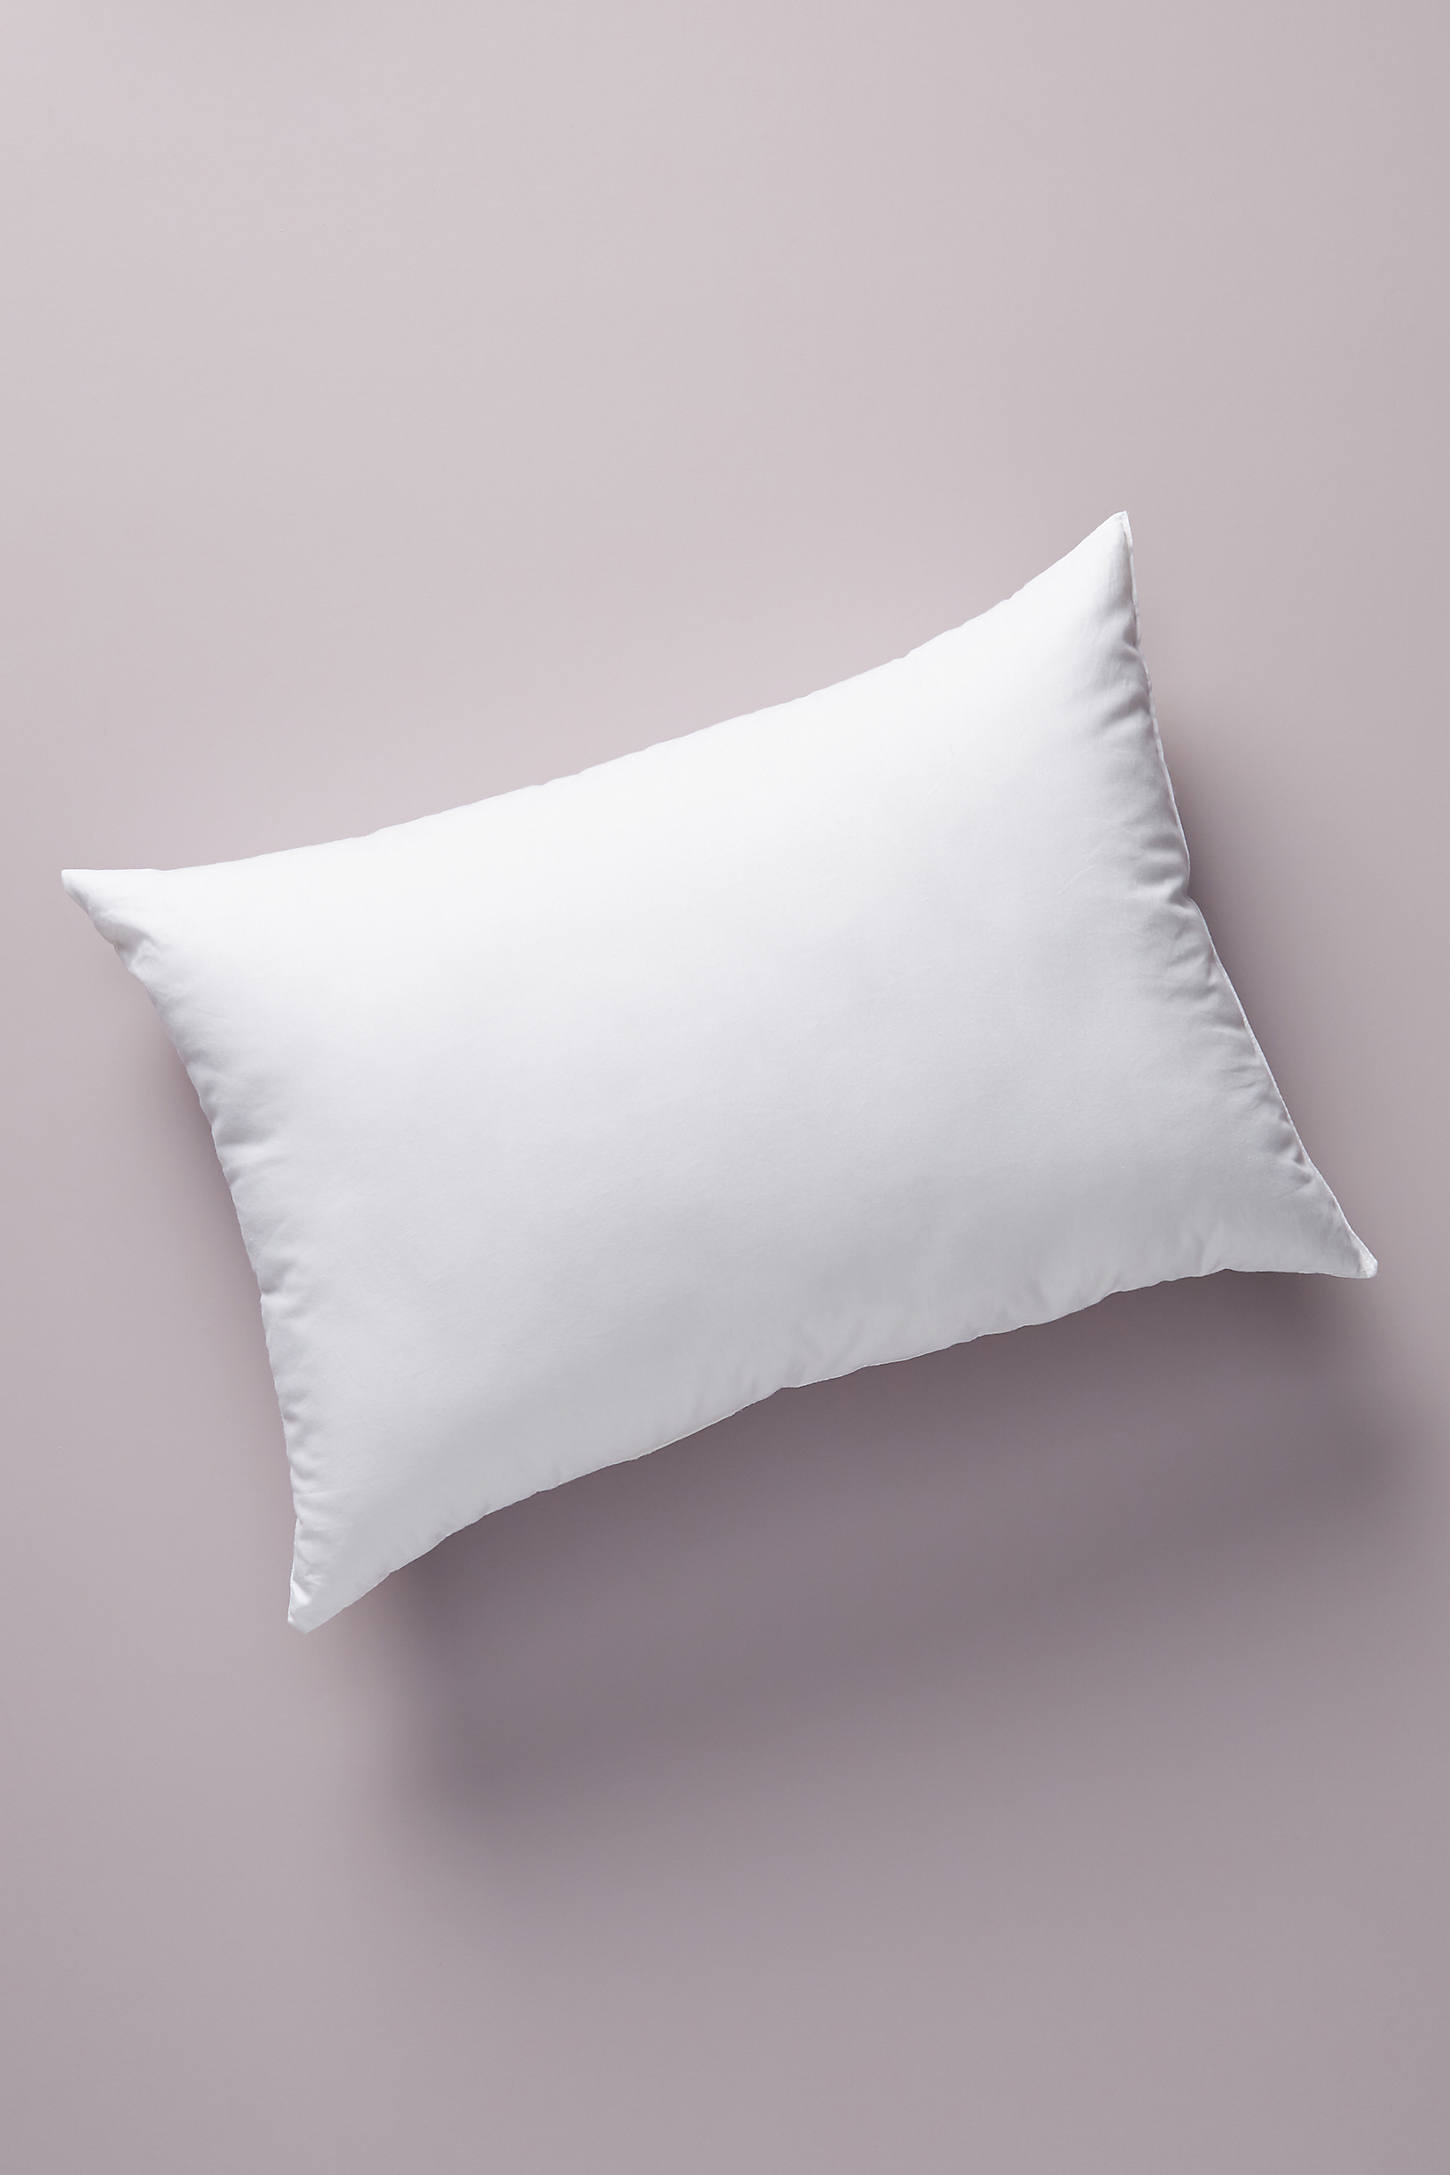 Decorative Pillow Insert - Image 0